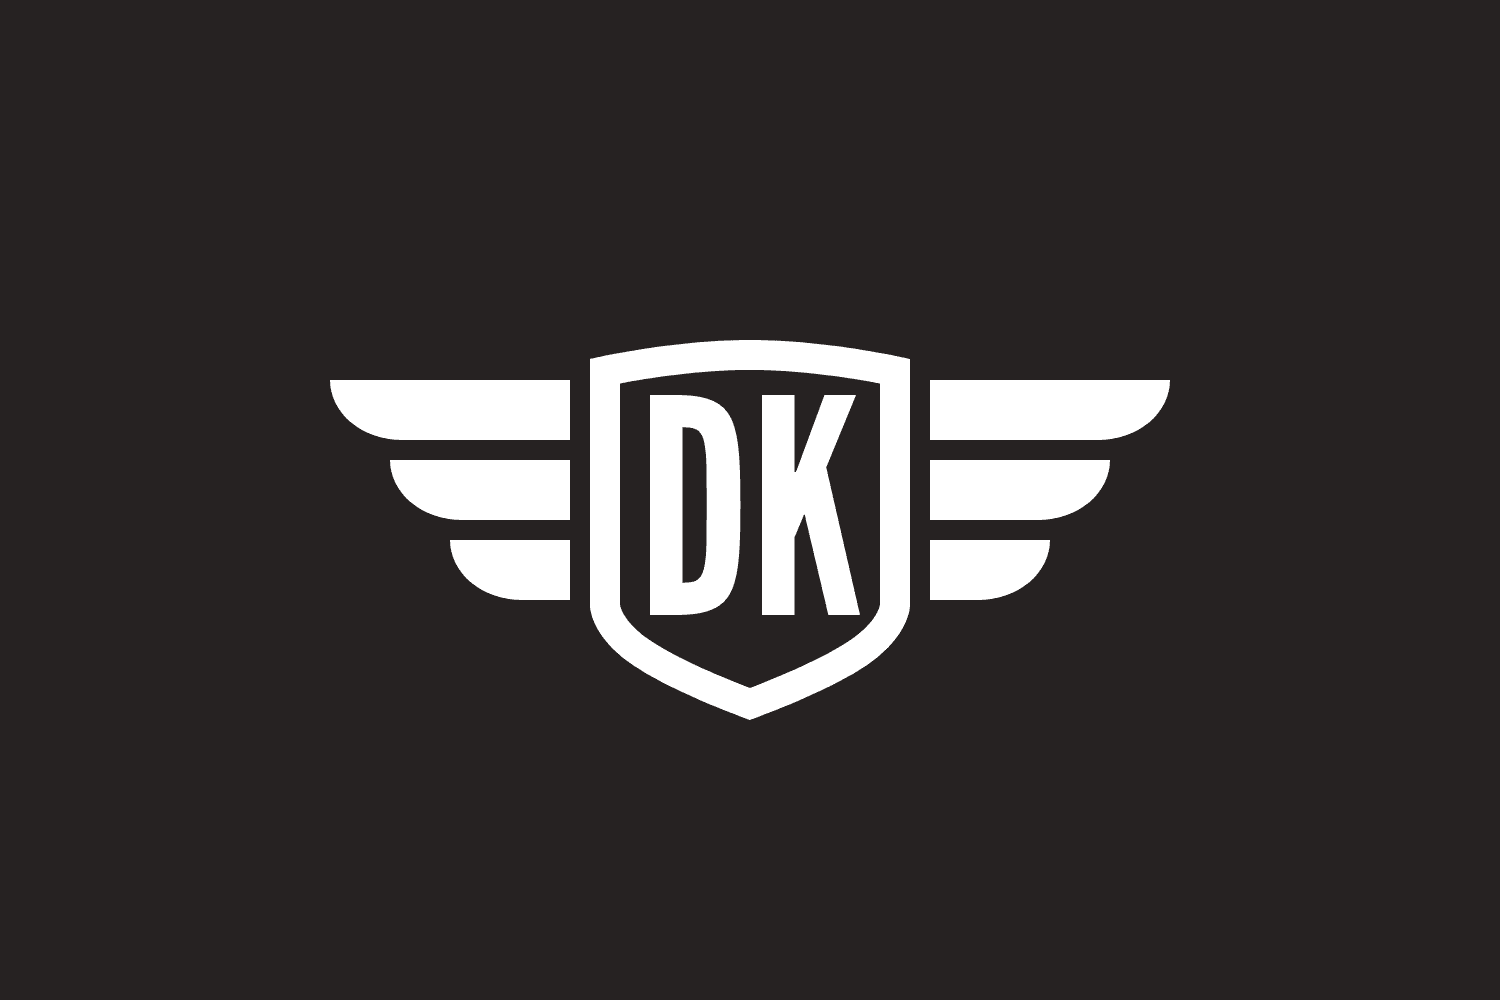 DK by g4merxethan on DeviantArt